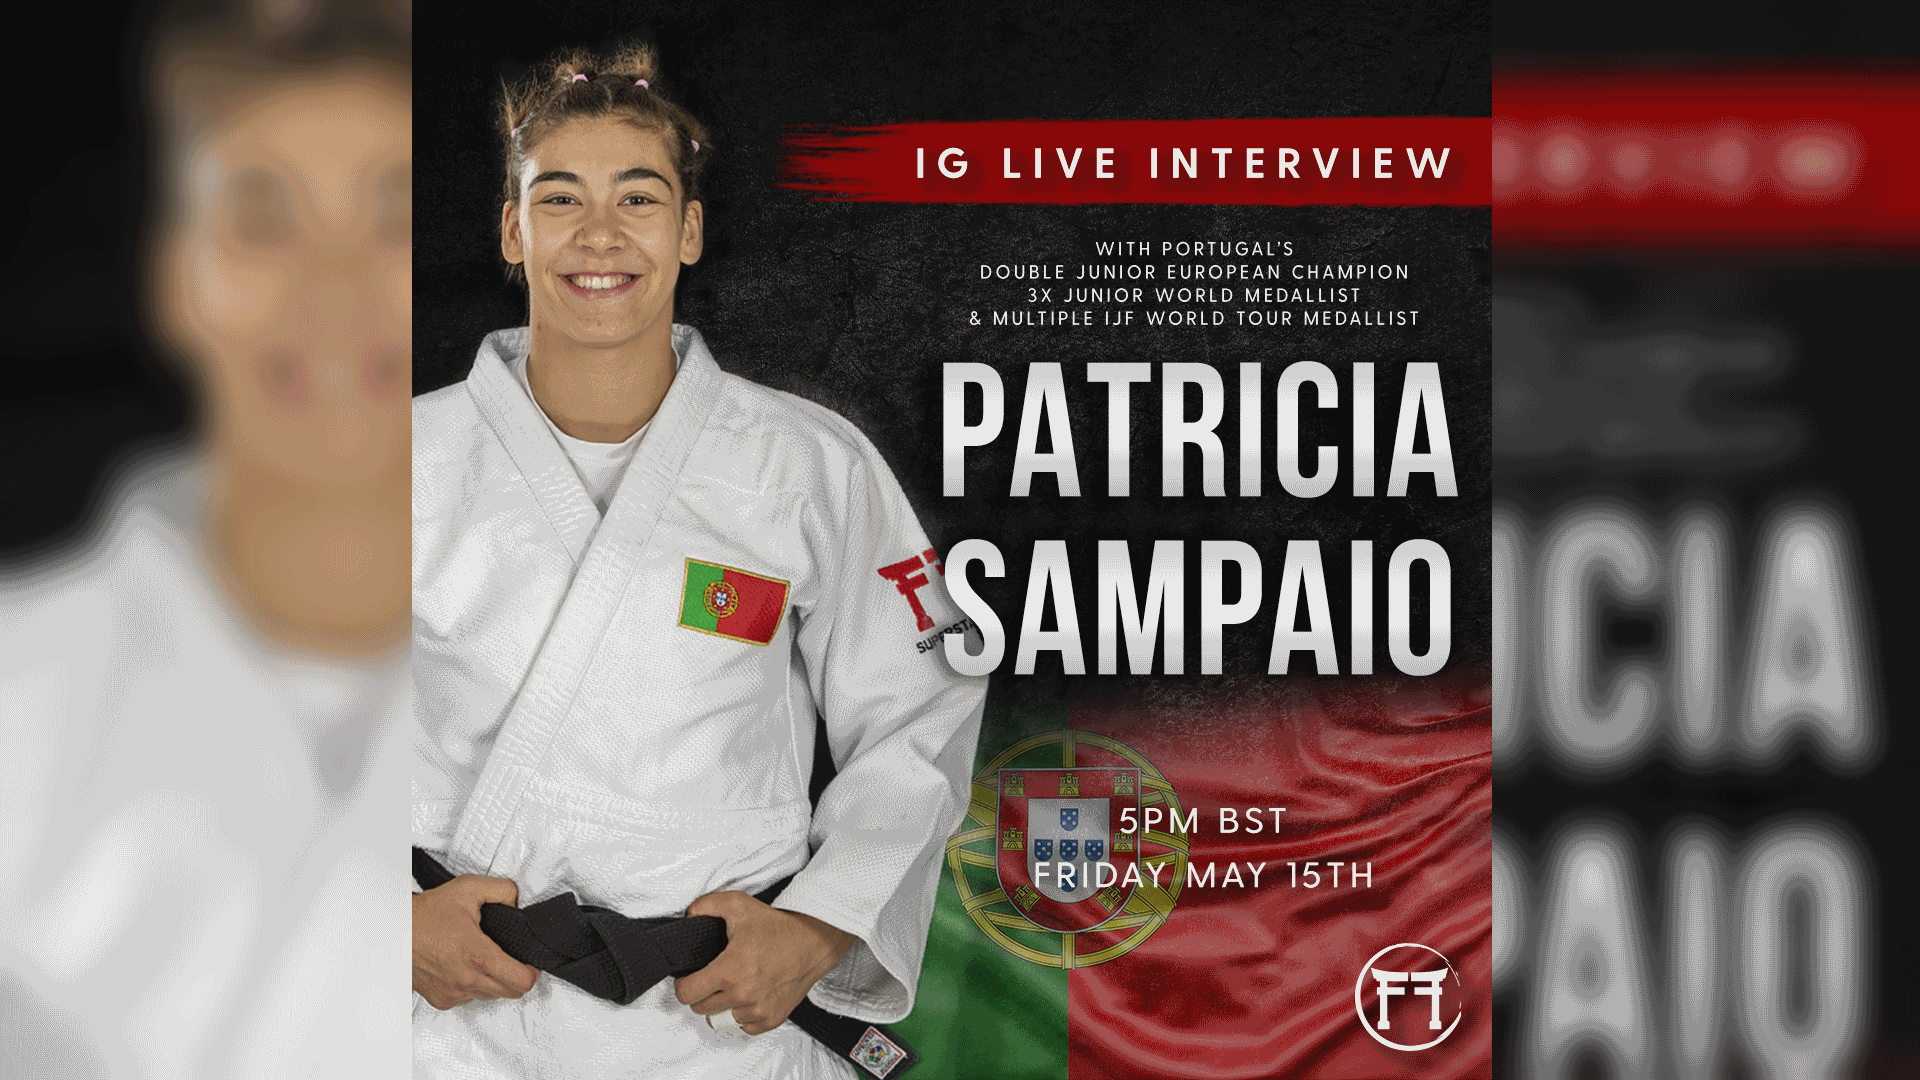 IG Live With Patricia Sampaio